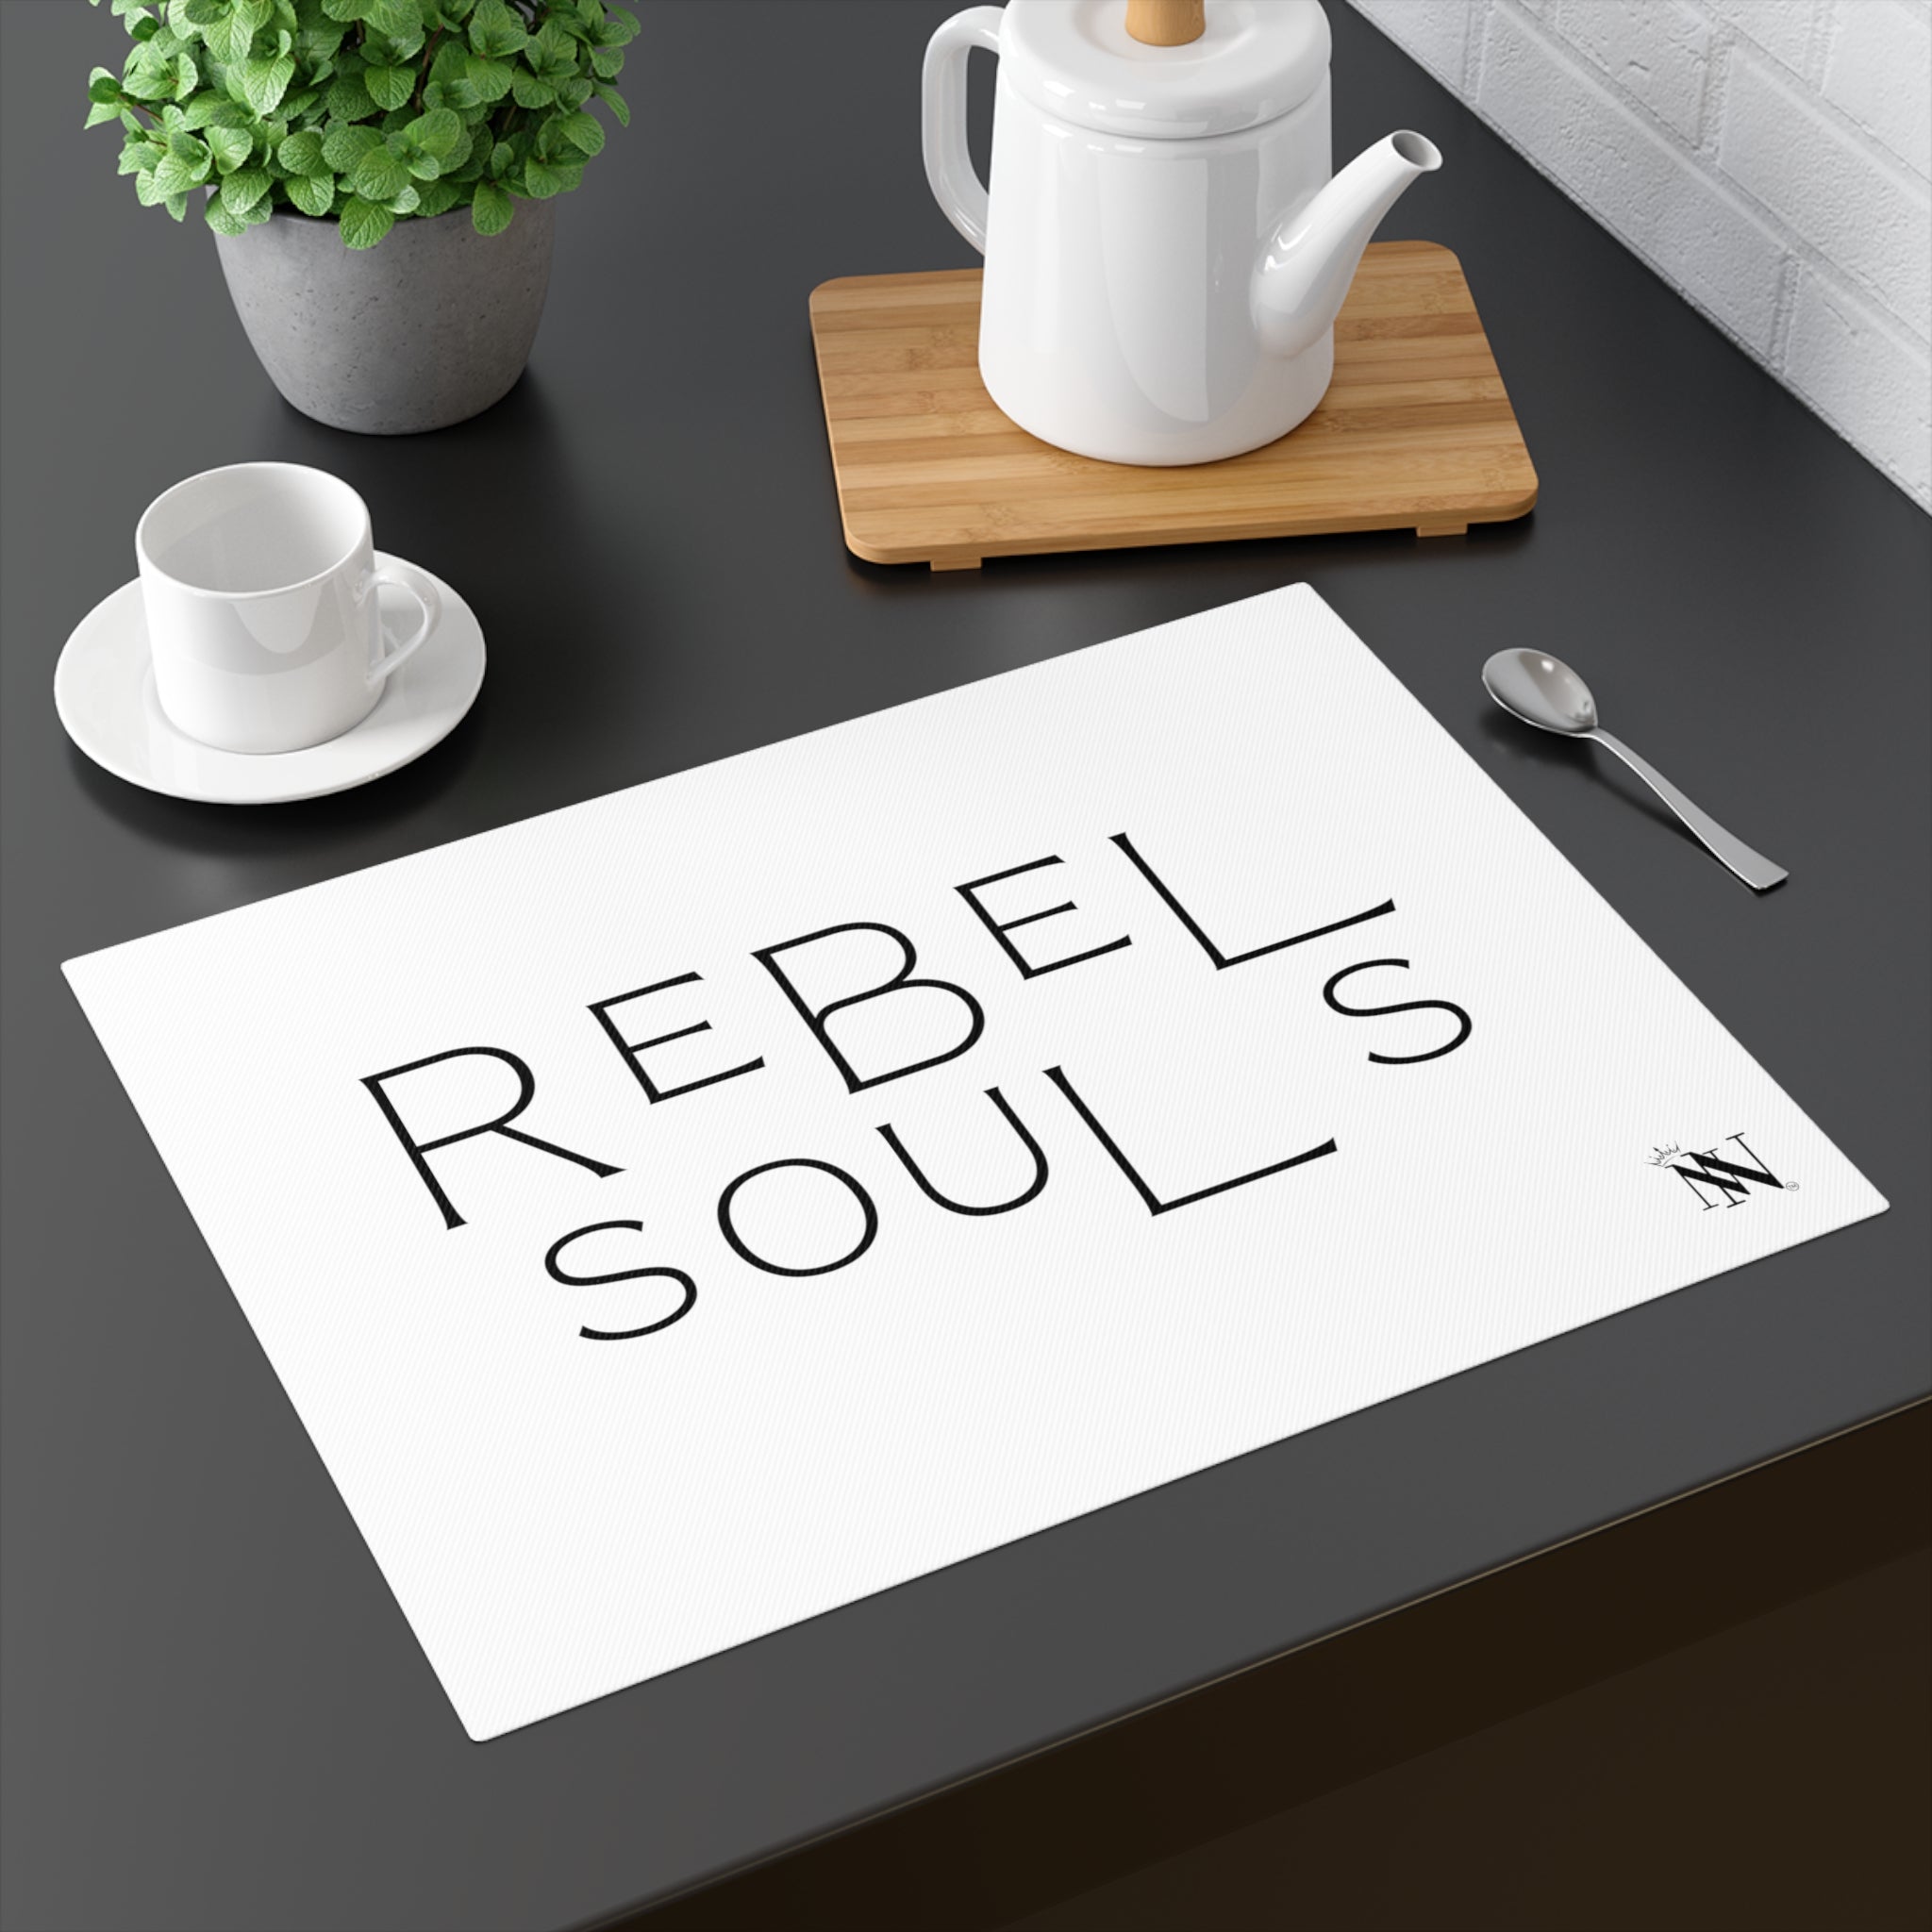 Rebel souls sex toys mat